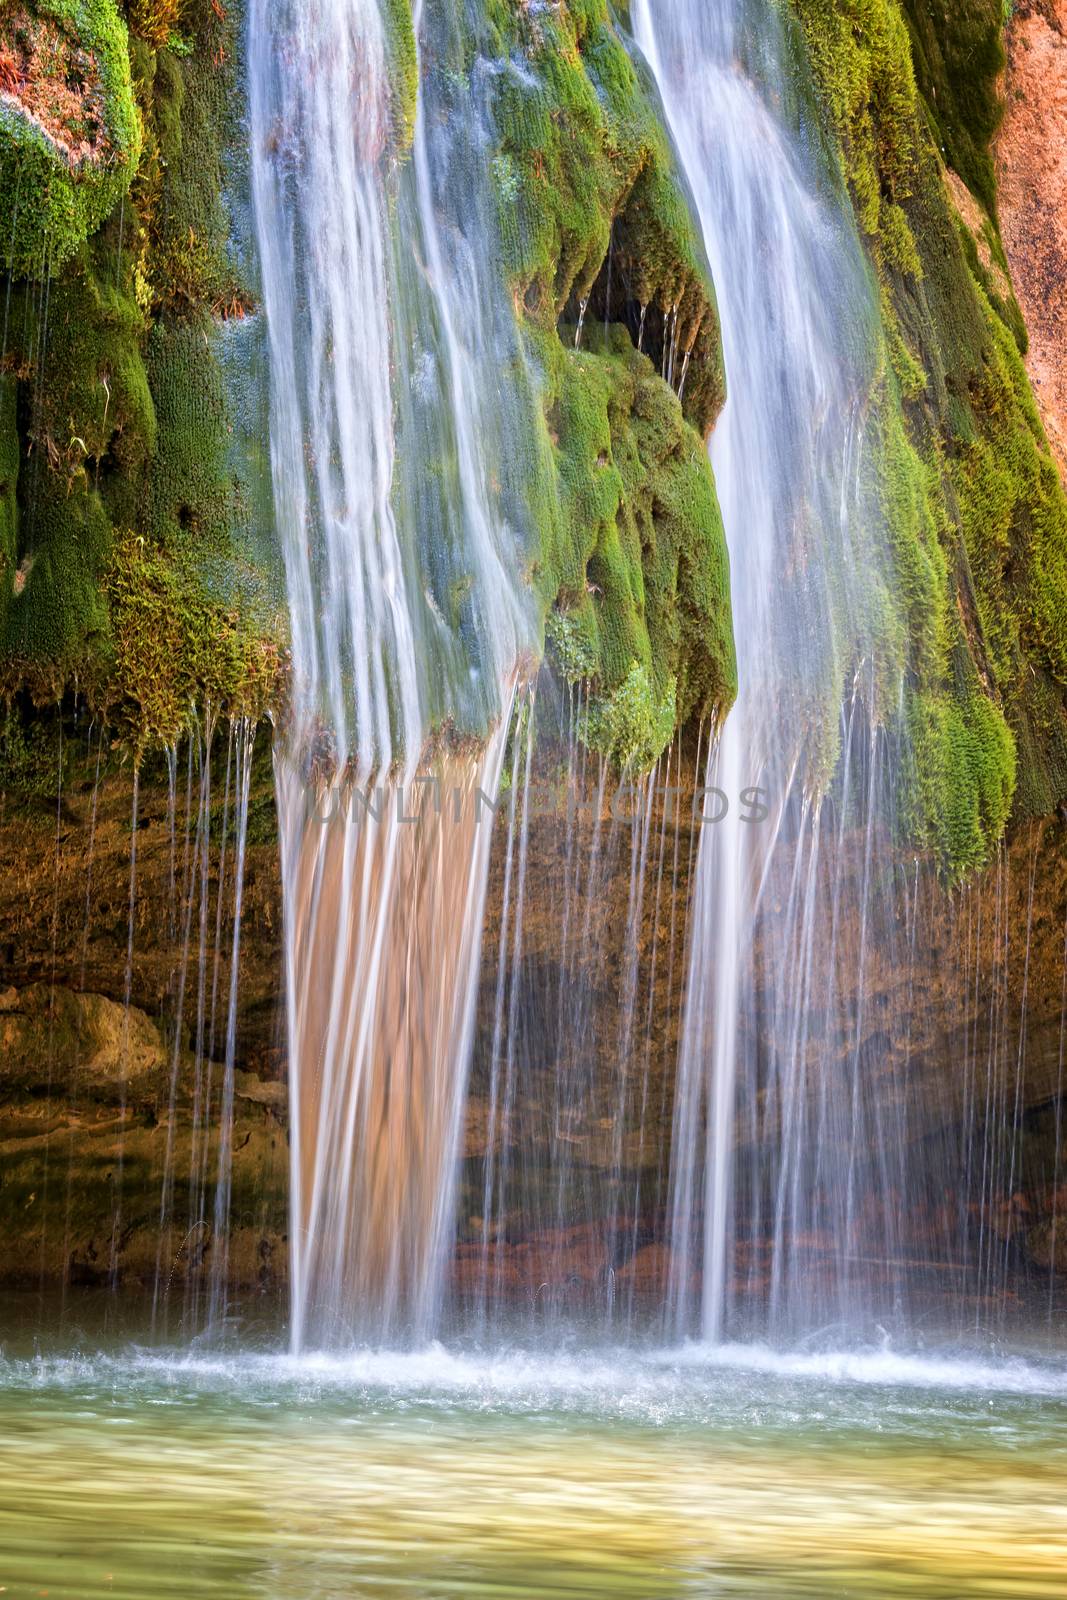 Nice waterfall on a mossy rock